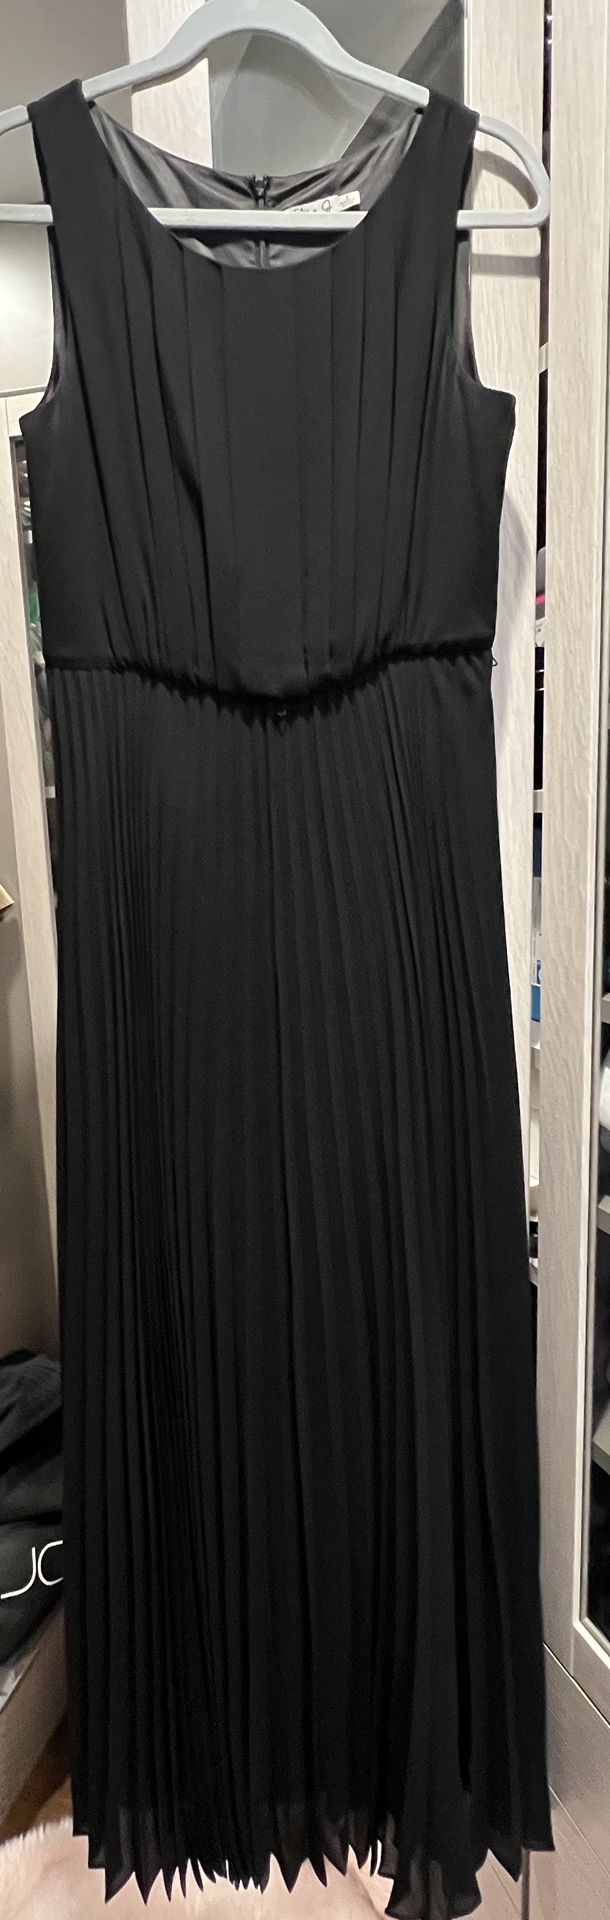 Long Pleated Dress Black Size 8